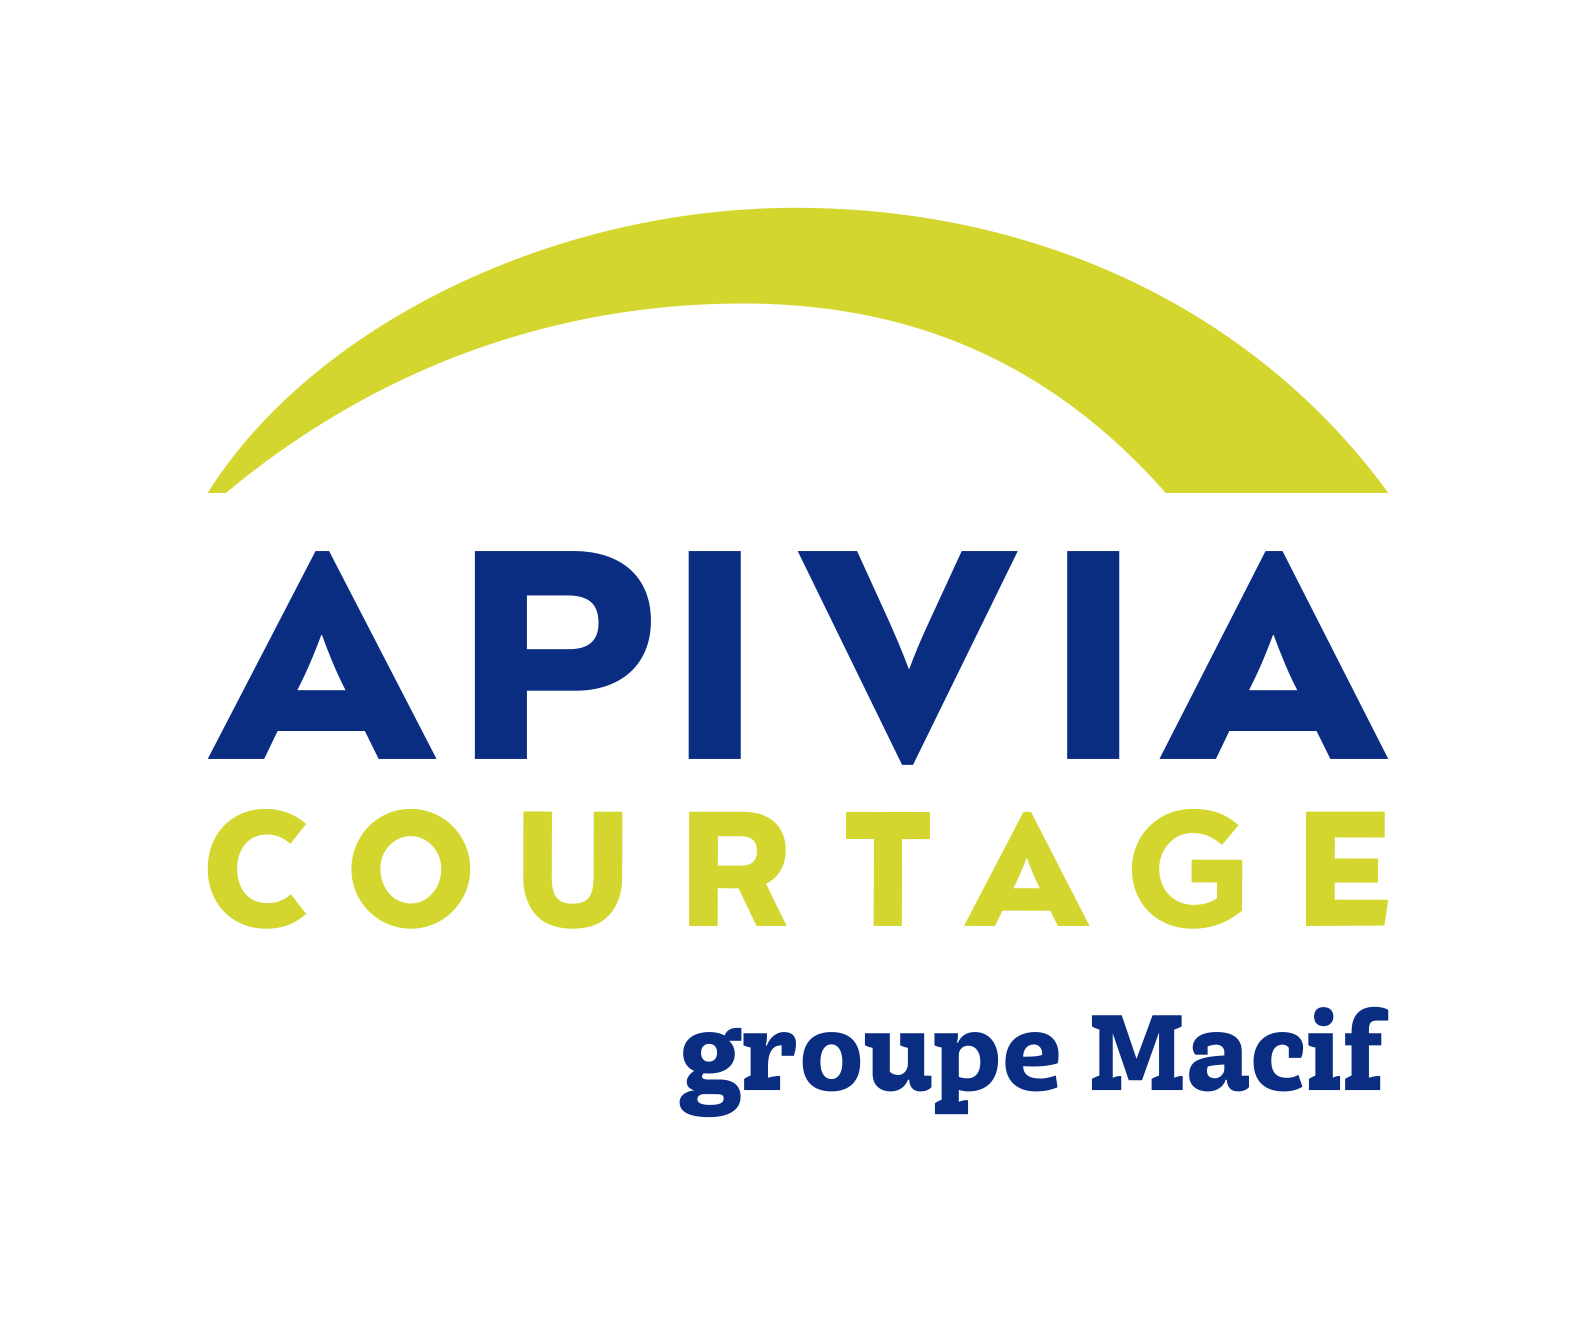 APIVIA_COURTAGE_GROUPE_MACIF_RVB